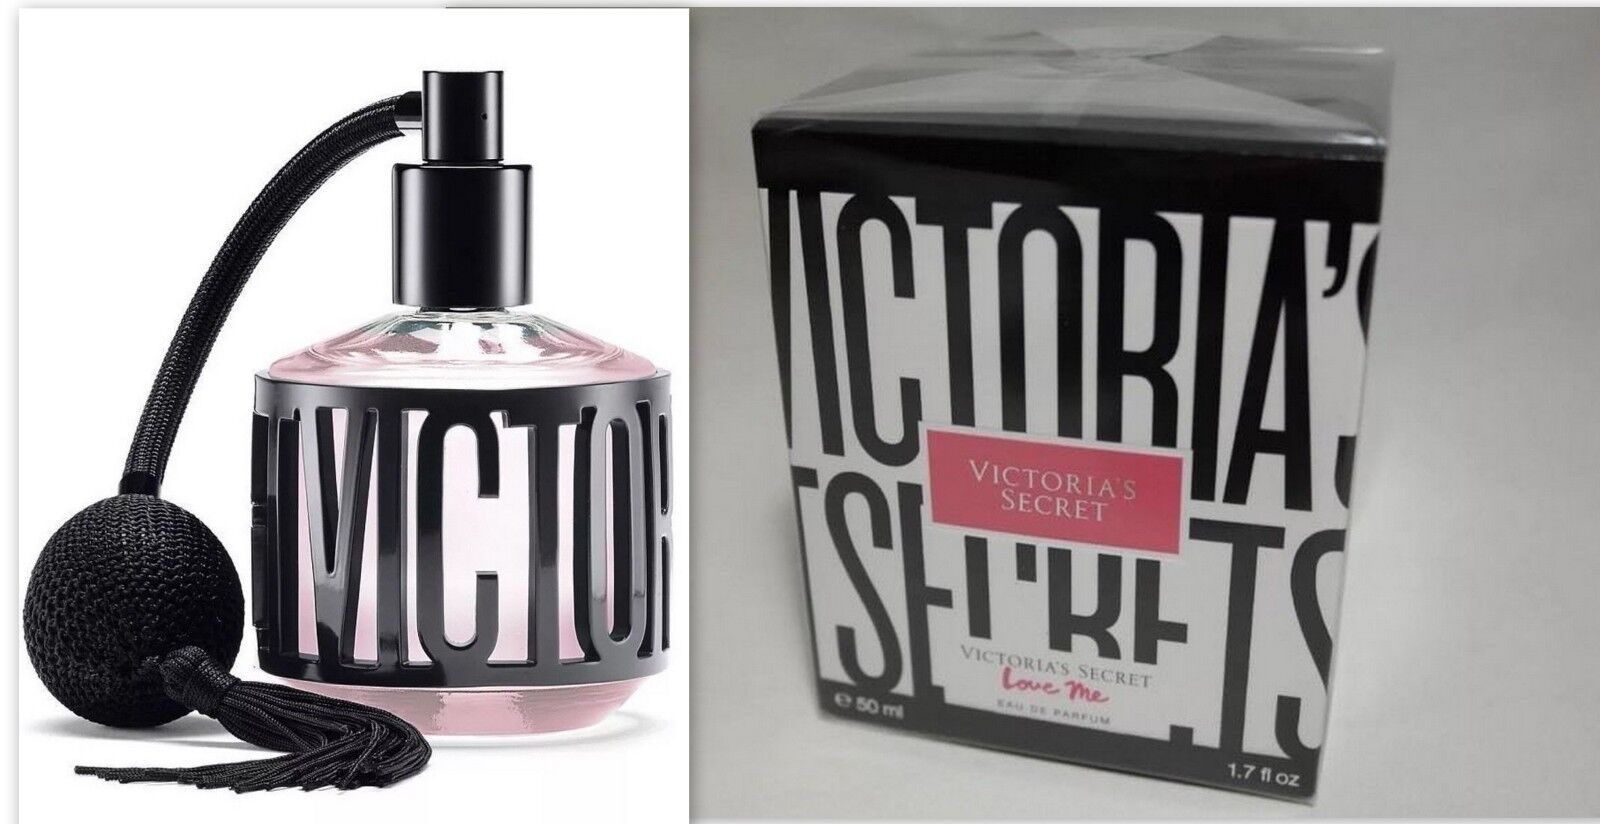 NEW Victoriaapos;s Secret LOVE ME Eau fl De Max 77% Superlatite OFF oz 1.7 Parfum perfu